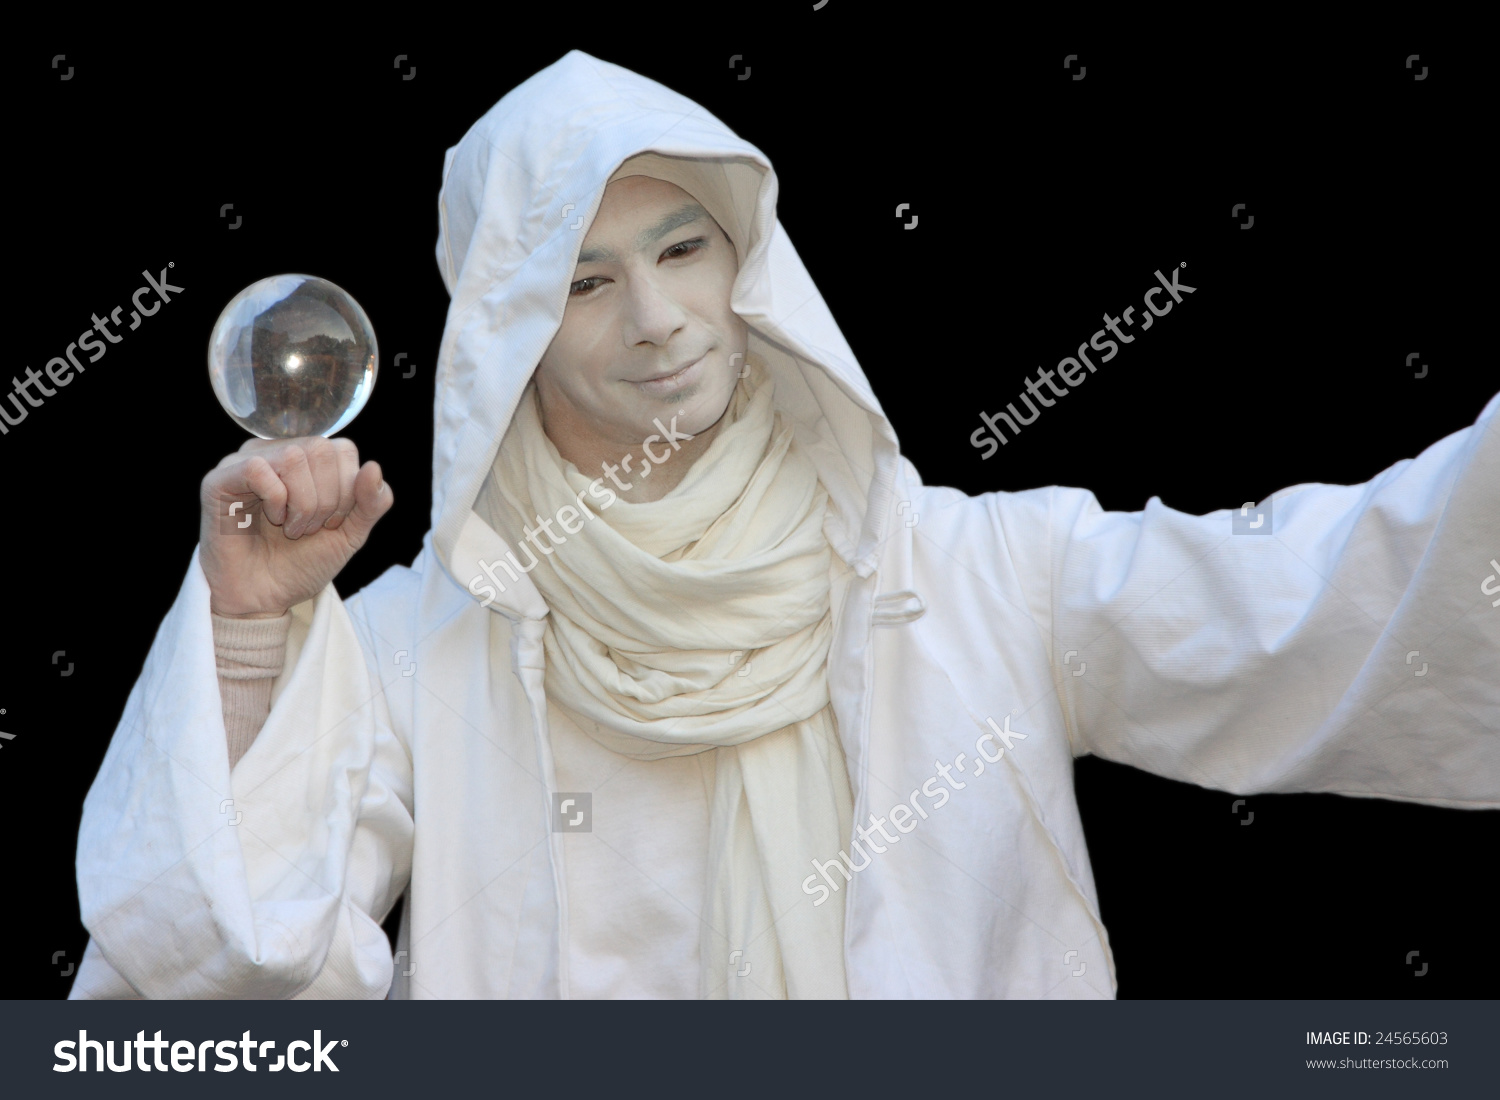 stock-photo-white-wizard-manipulating-crystal-balls-isolated-on-black-background-24565603